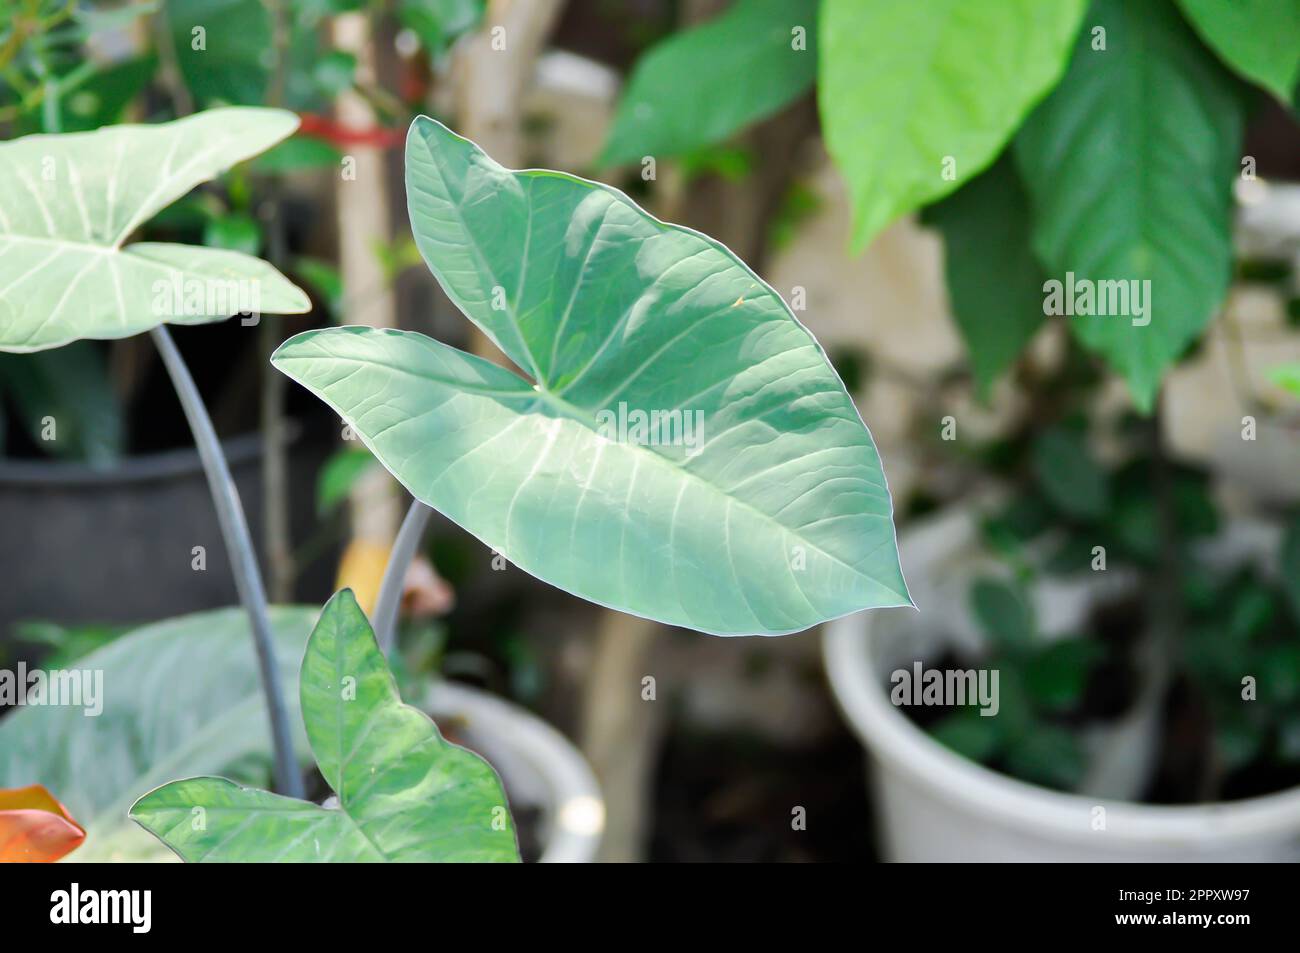 xanthosoma sagittifolium, malanga or xanthosoma or Colocasia plant Stock Photo